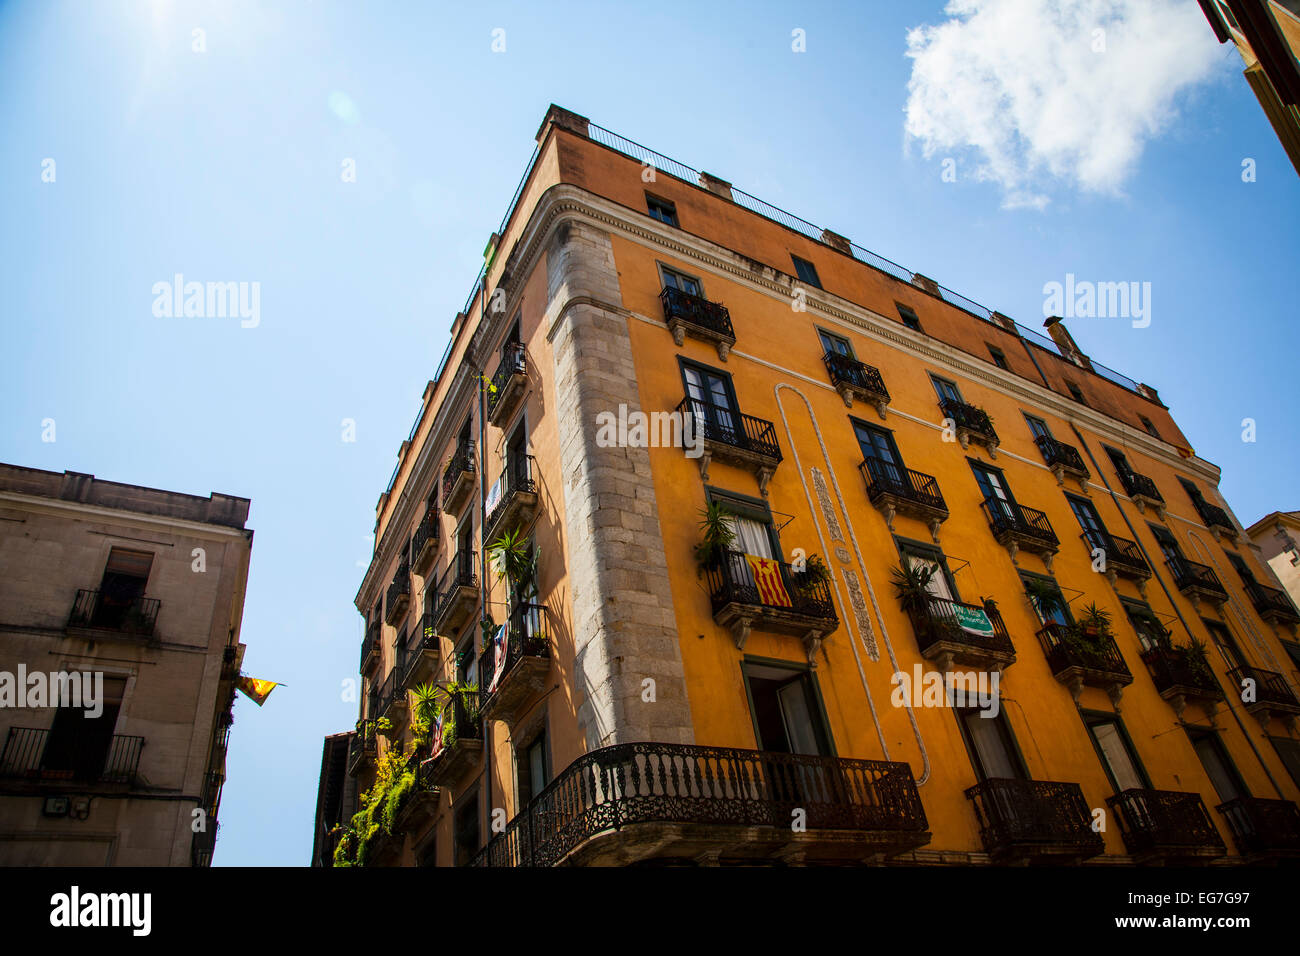 Street of Girona, Spain Stock Photo